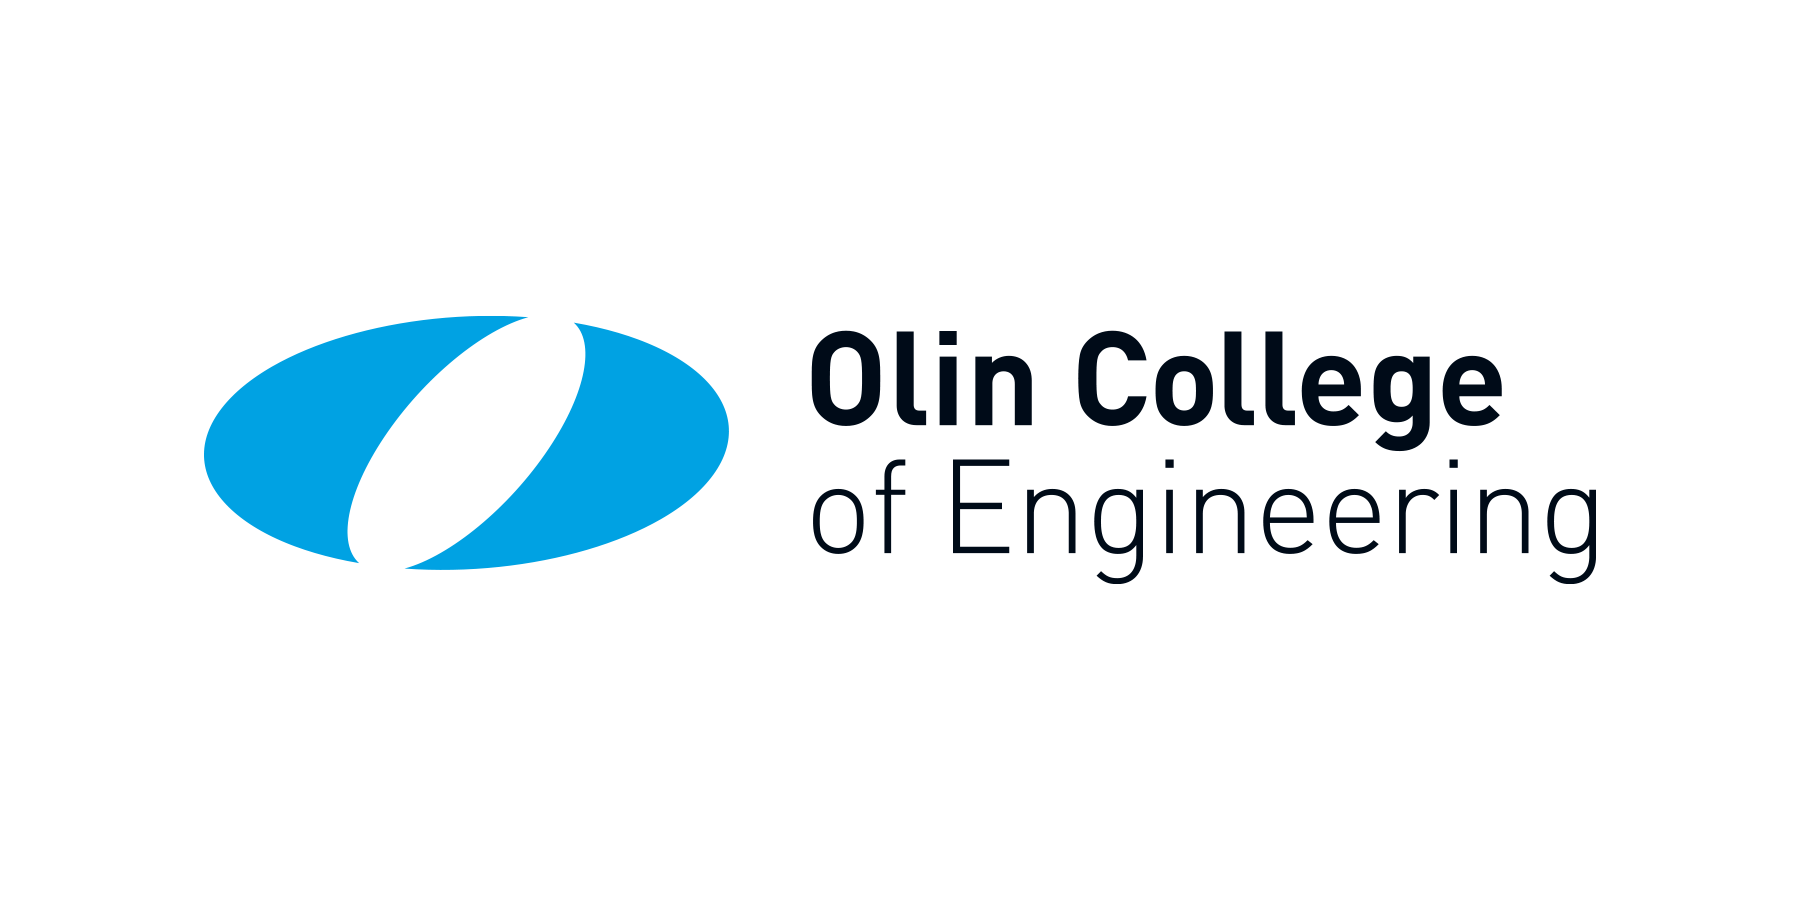 Olin_logo